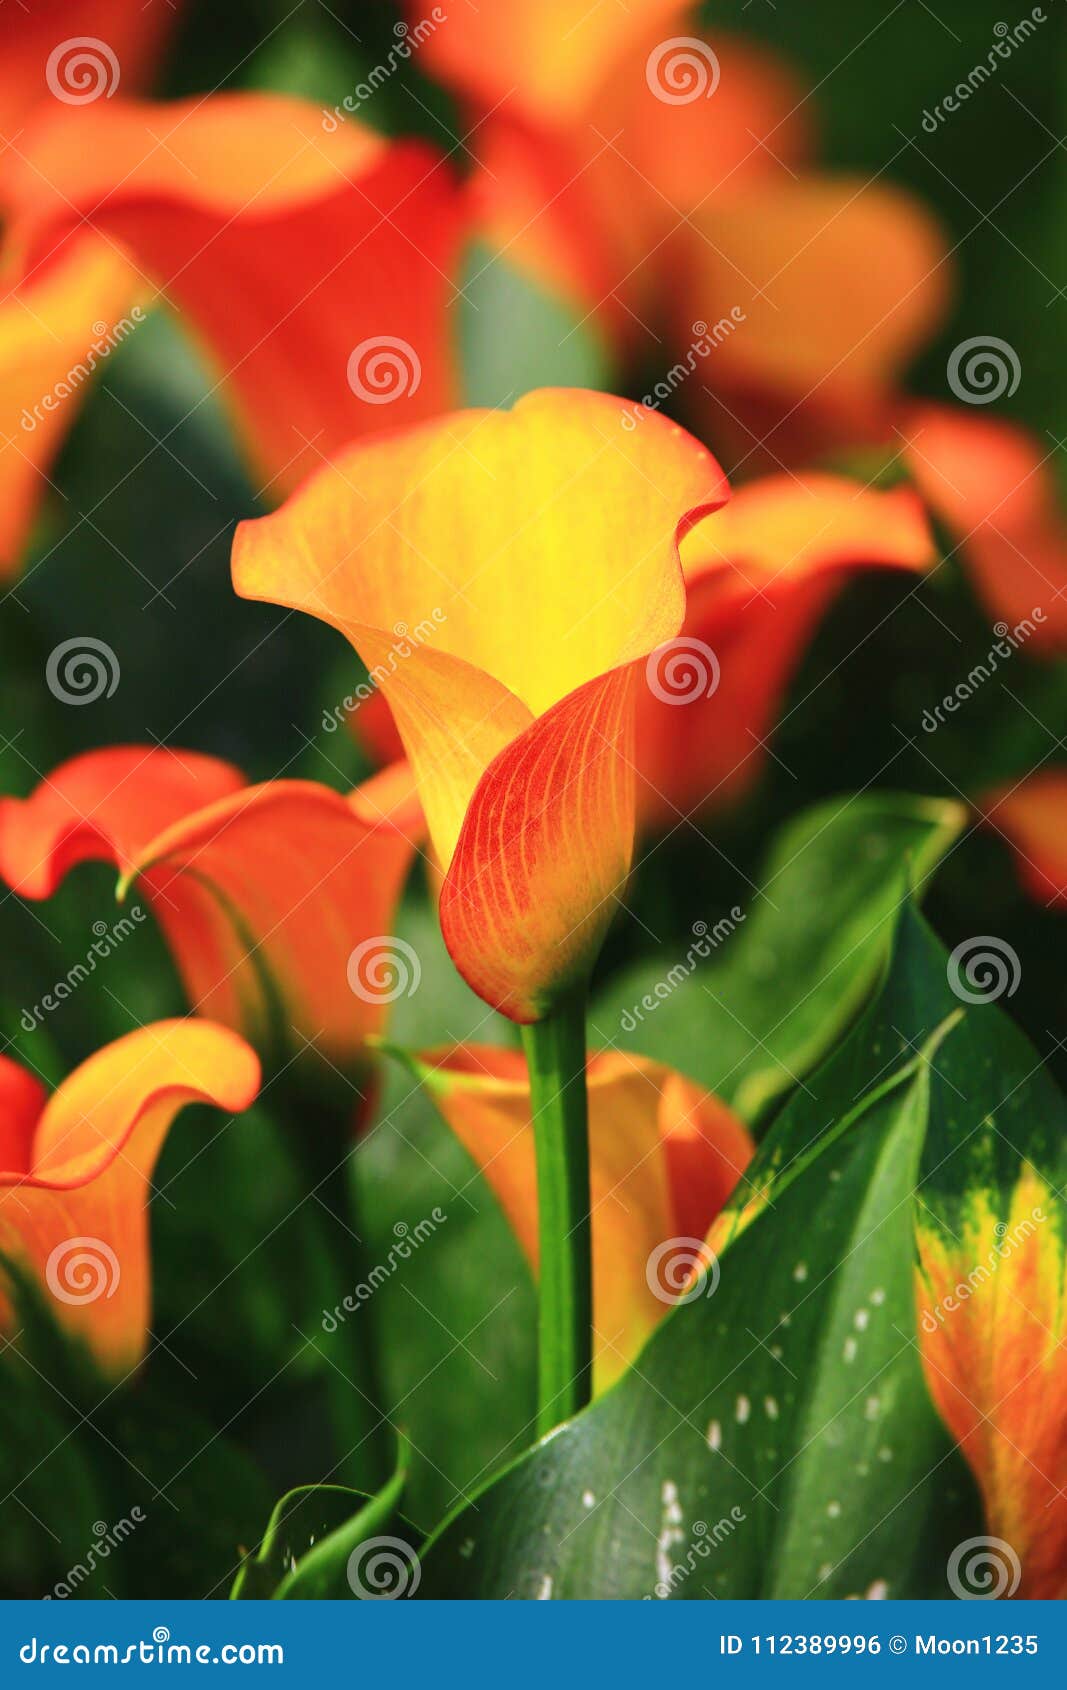 Calla lily field closeup stock photo. Image of gorgeous - 112389996